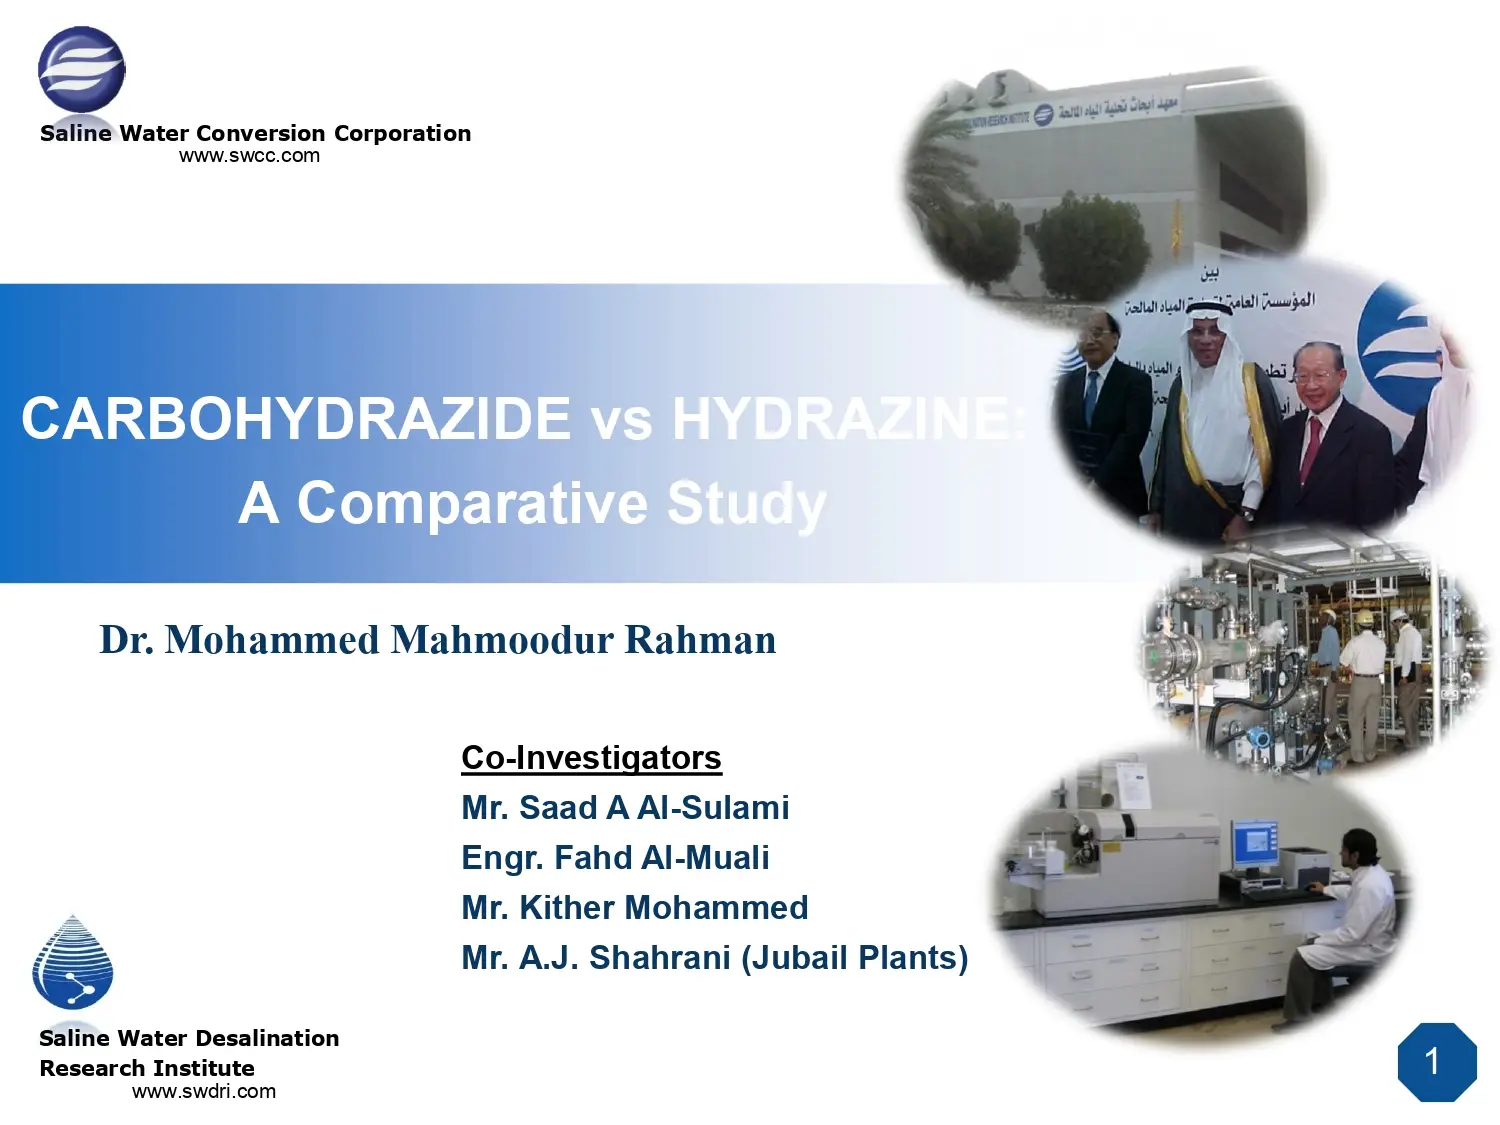 Carbohydrazide Vs Hydrazine A Comparative Study